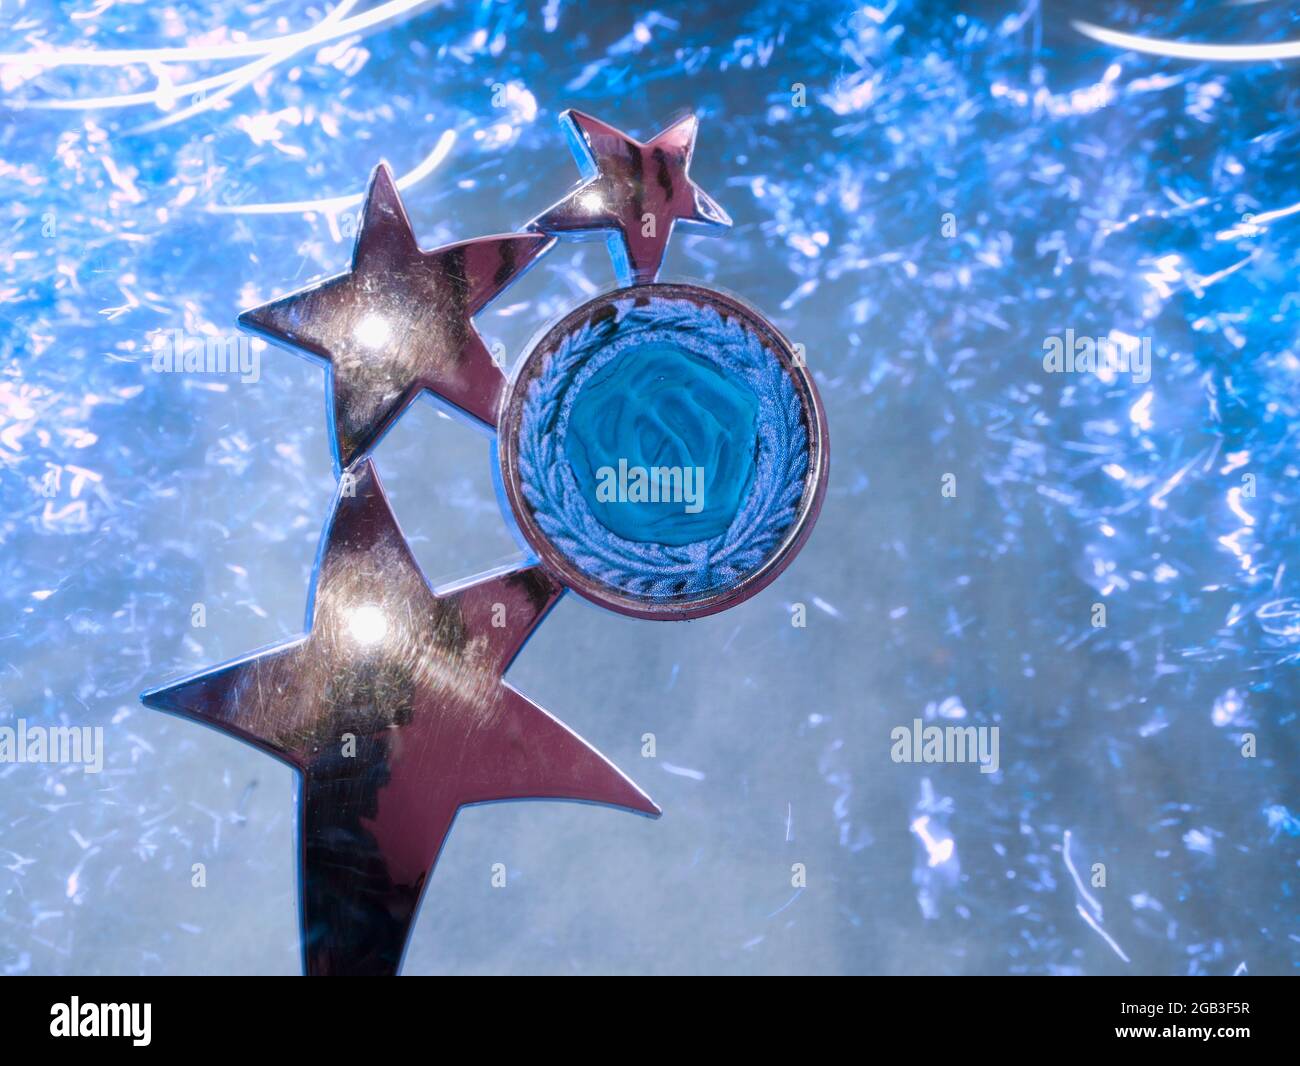 Winning award shield stars presented with bluish light sparkles background. Stock Photo